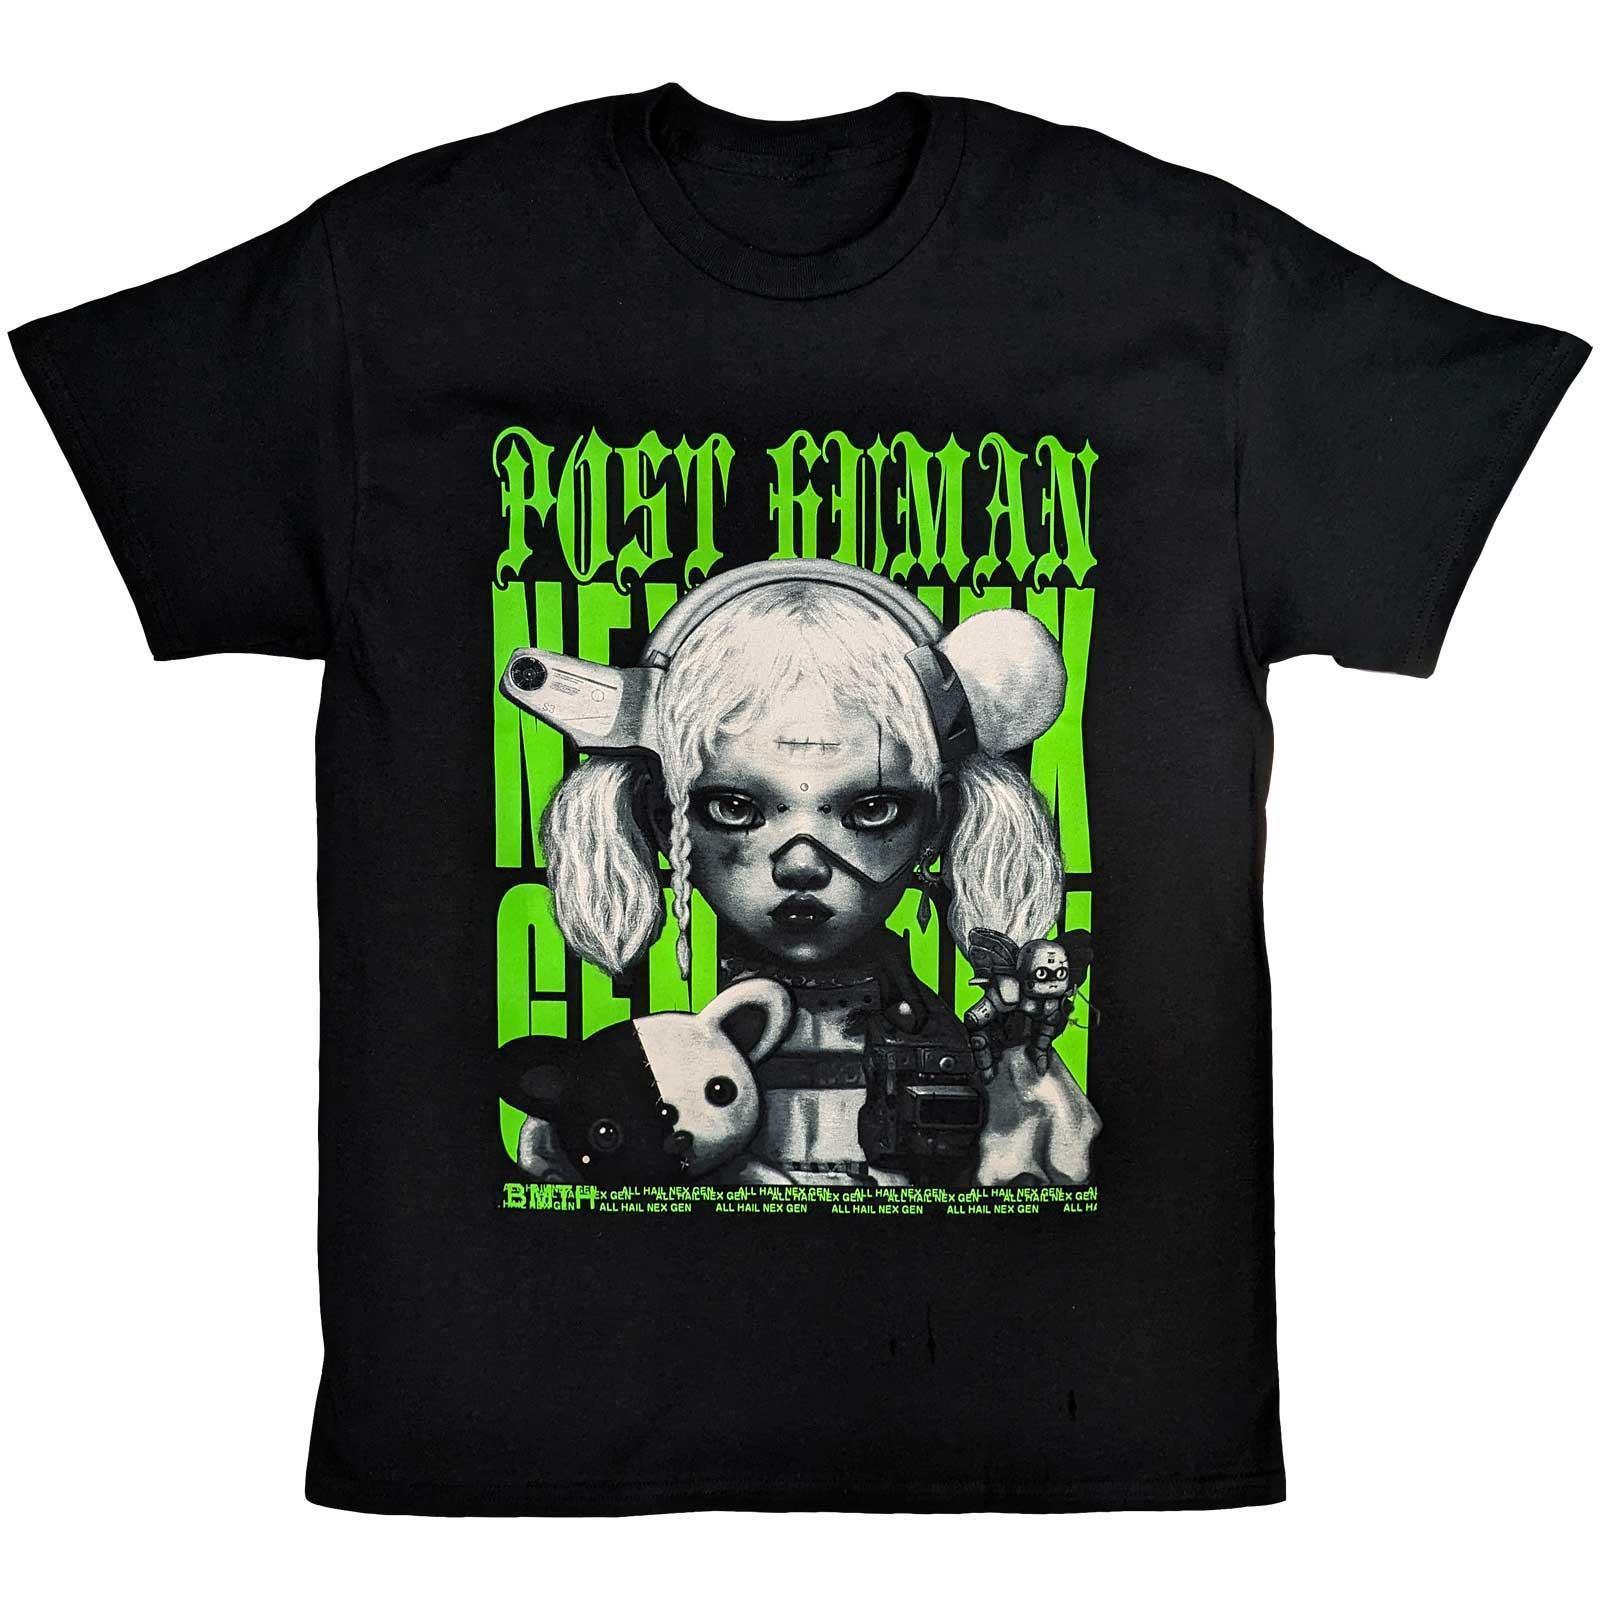 Bring Me The Horizon Unisex Adult Next Gen Cotton T-Shirt (Black/Green) (XL)